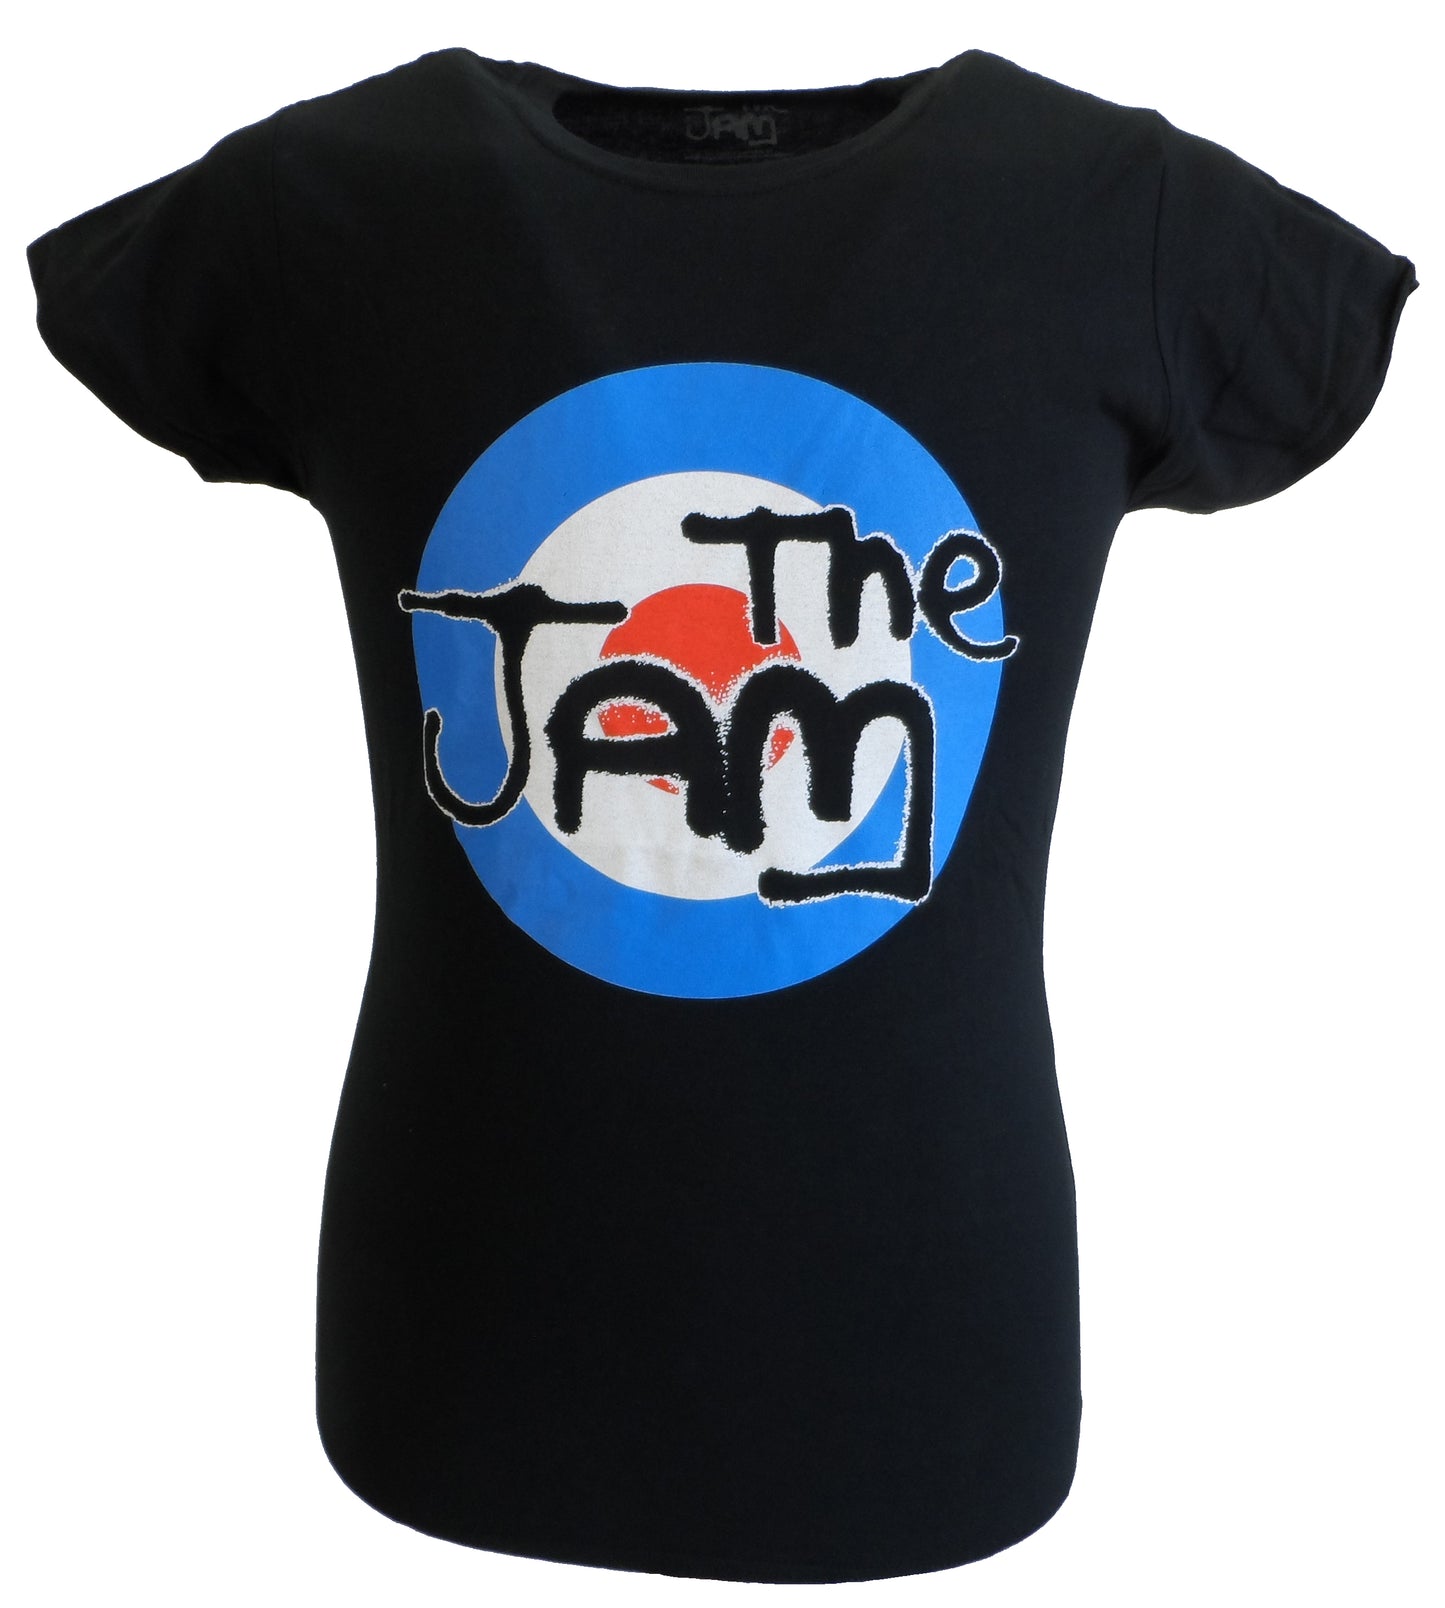 Offiziell lizenzierte schwarze Ziel-T-Shirts The Jam für Damen